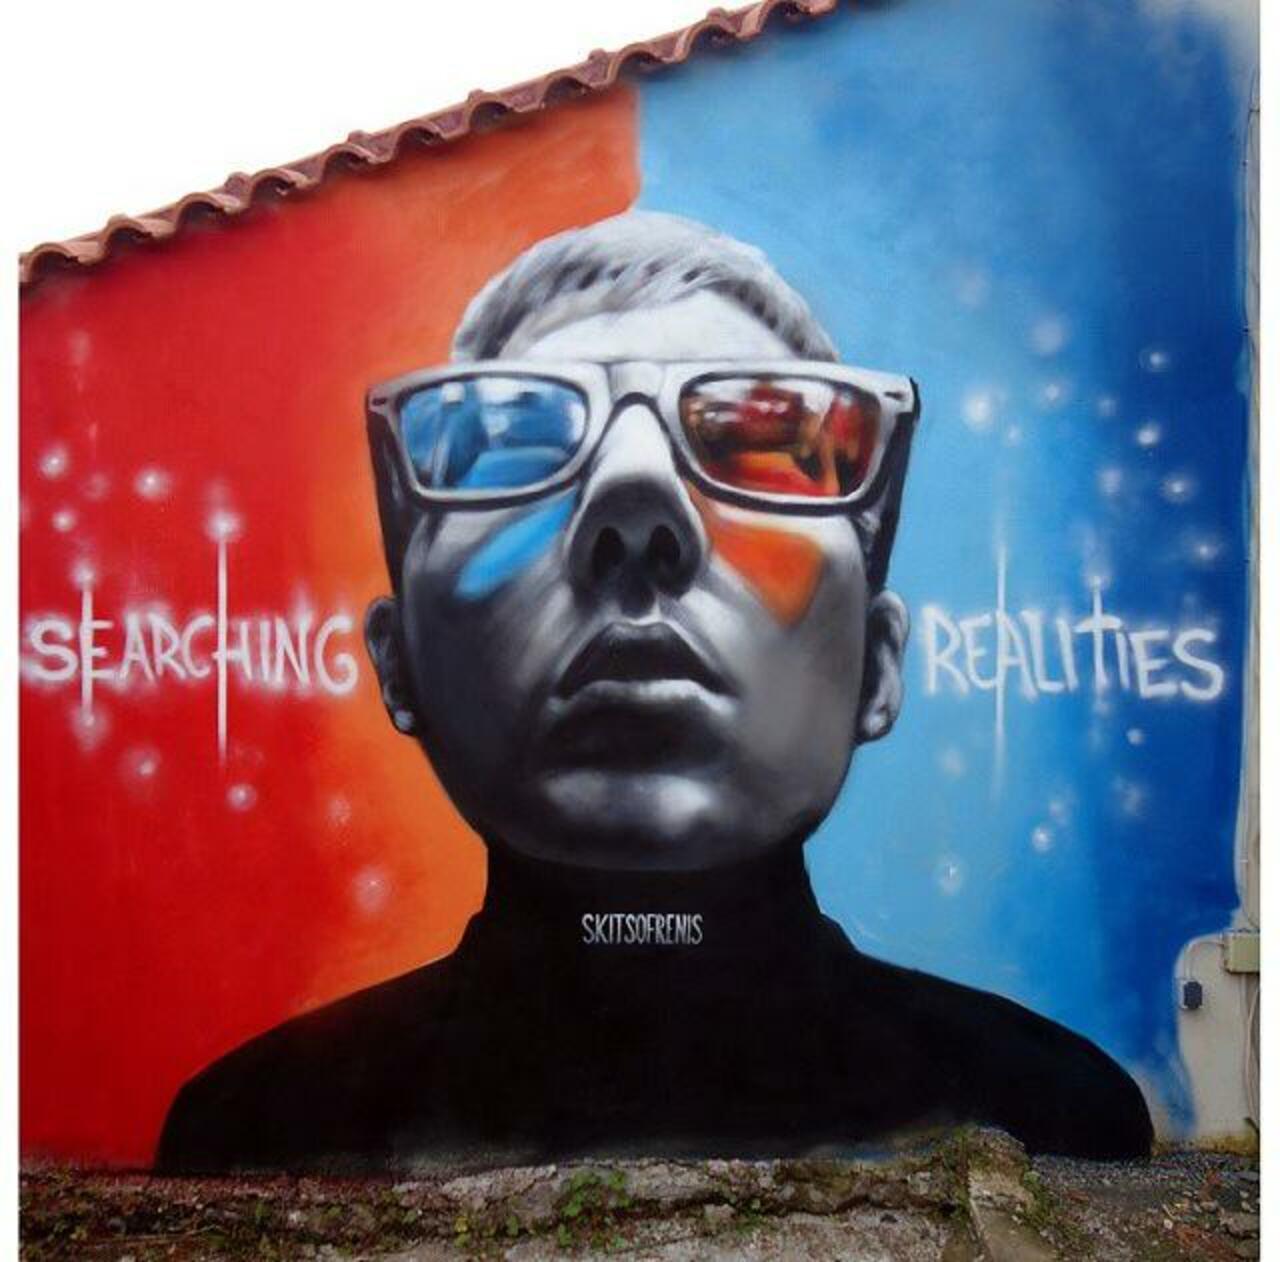 New Street Art titled 'Searching Realties' by skitsofrenis

#art #arte #graffiti #streetart http://t.co/7GiogDLAqi